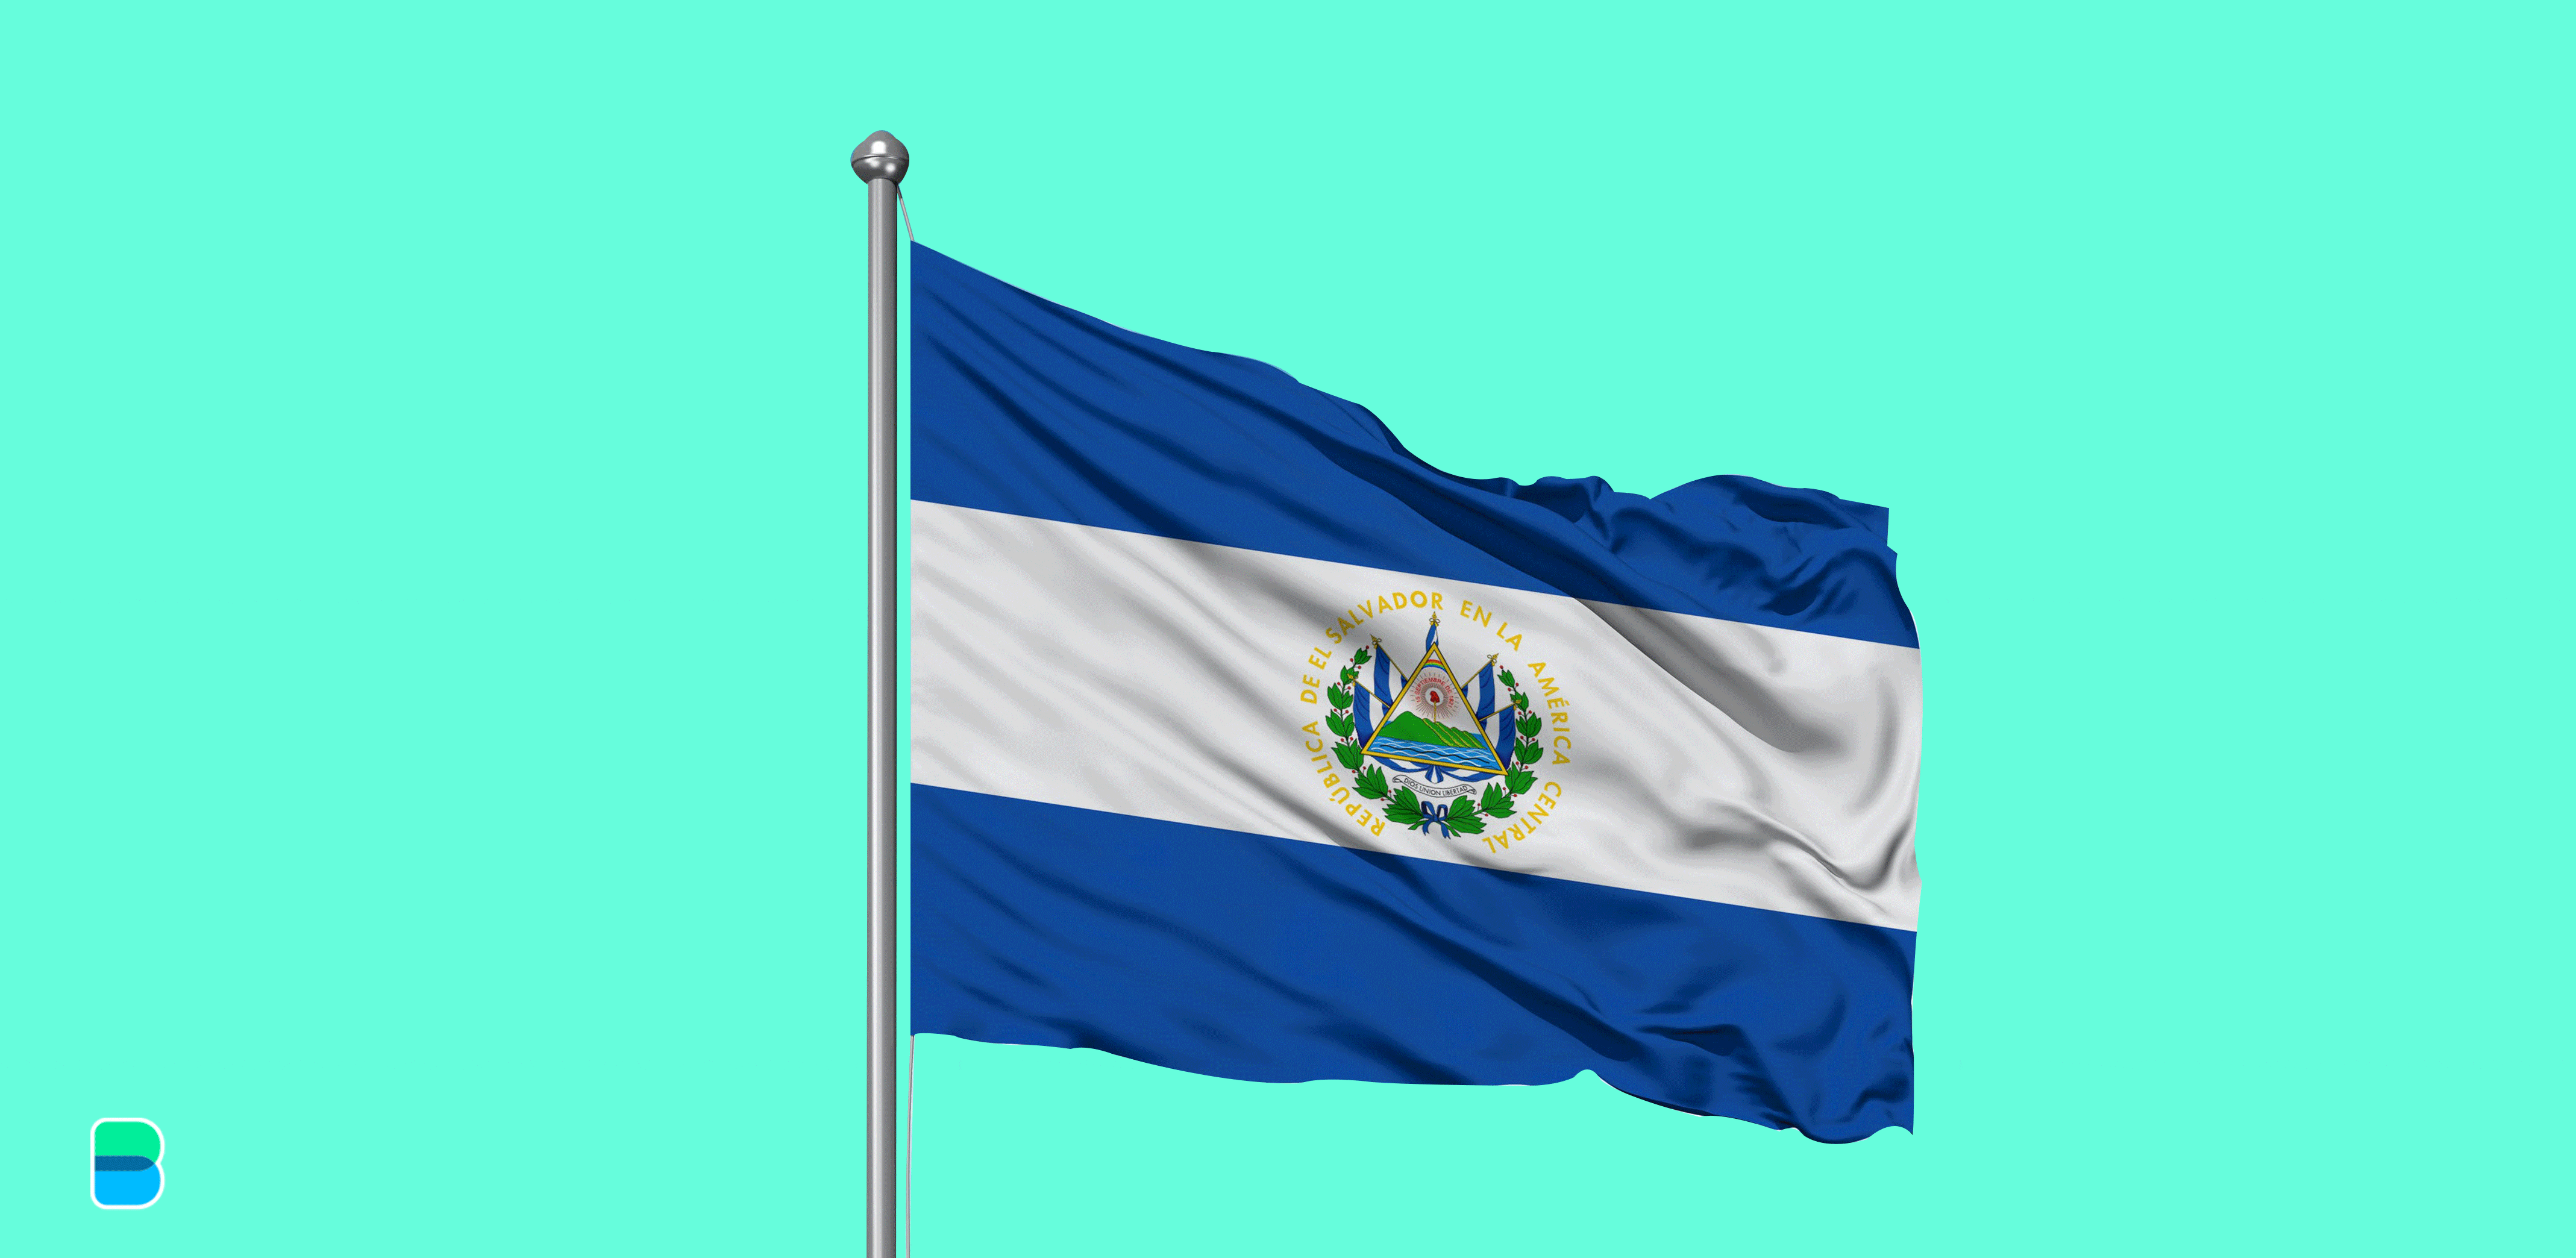 Bitcoin is proving to be a grande headache in El Salvador